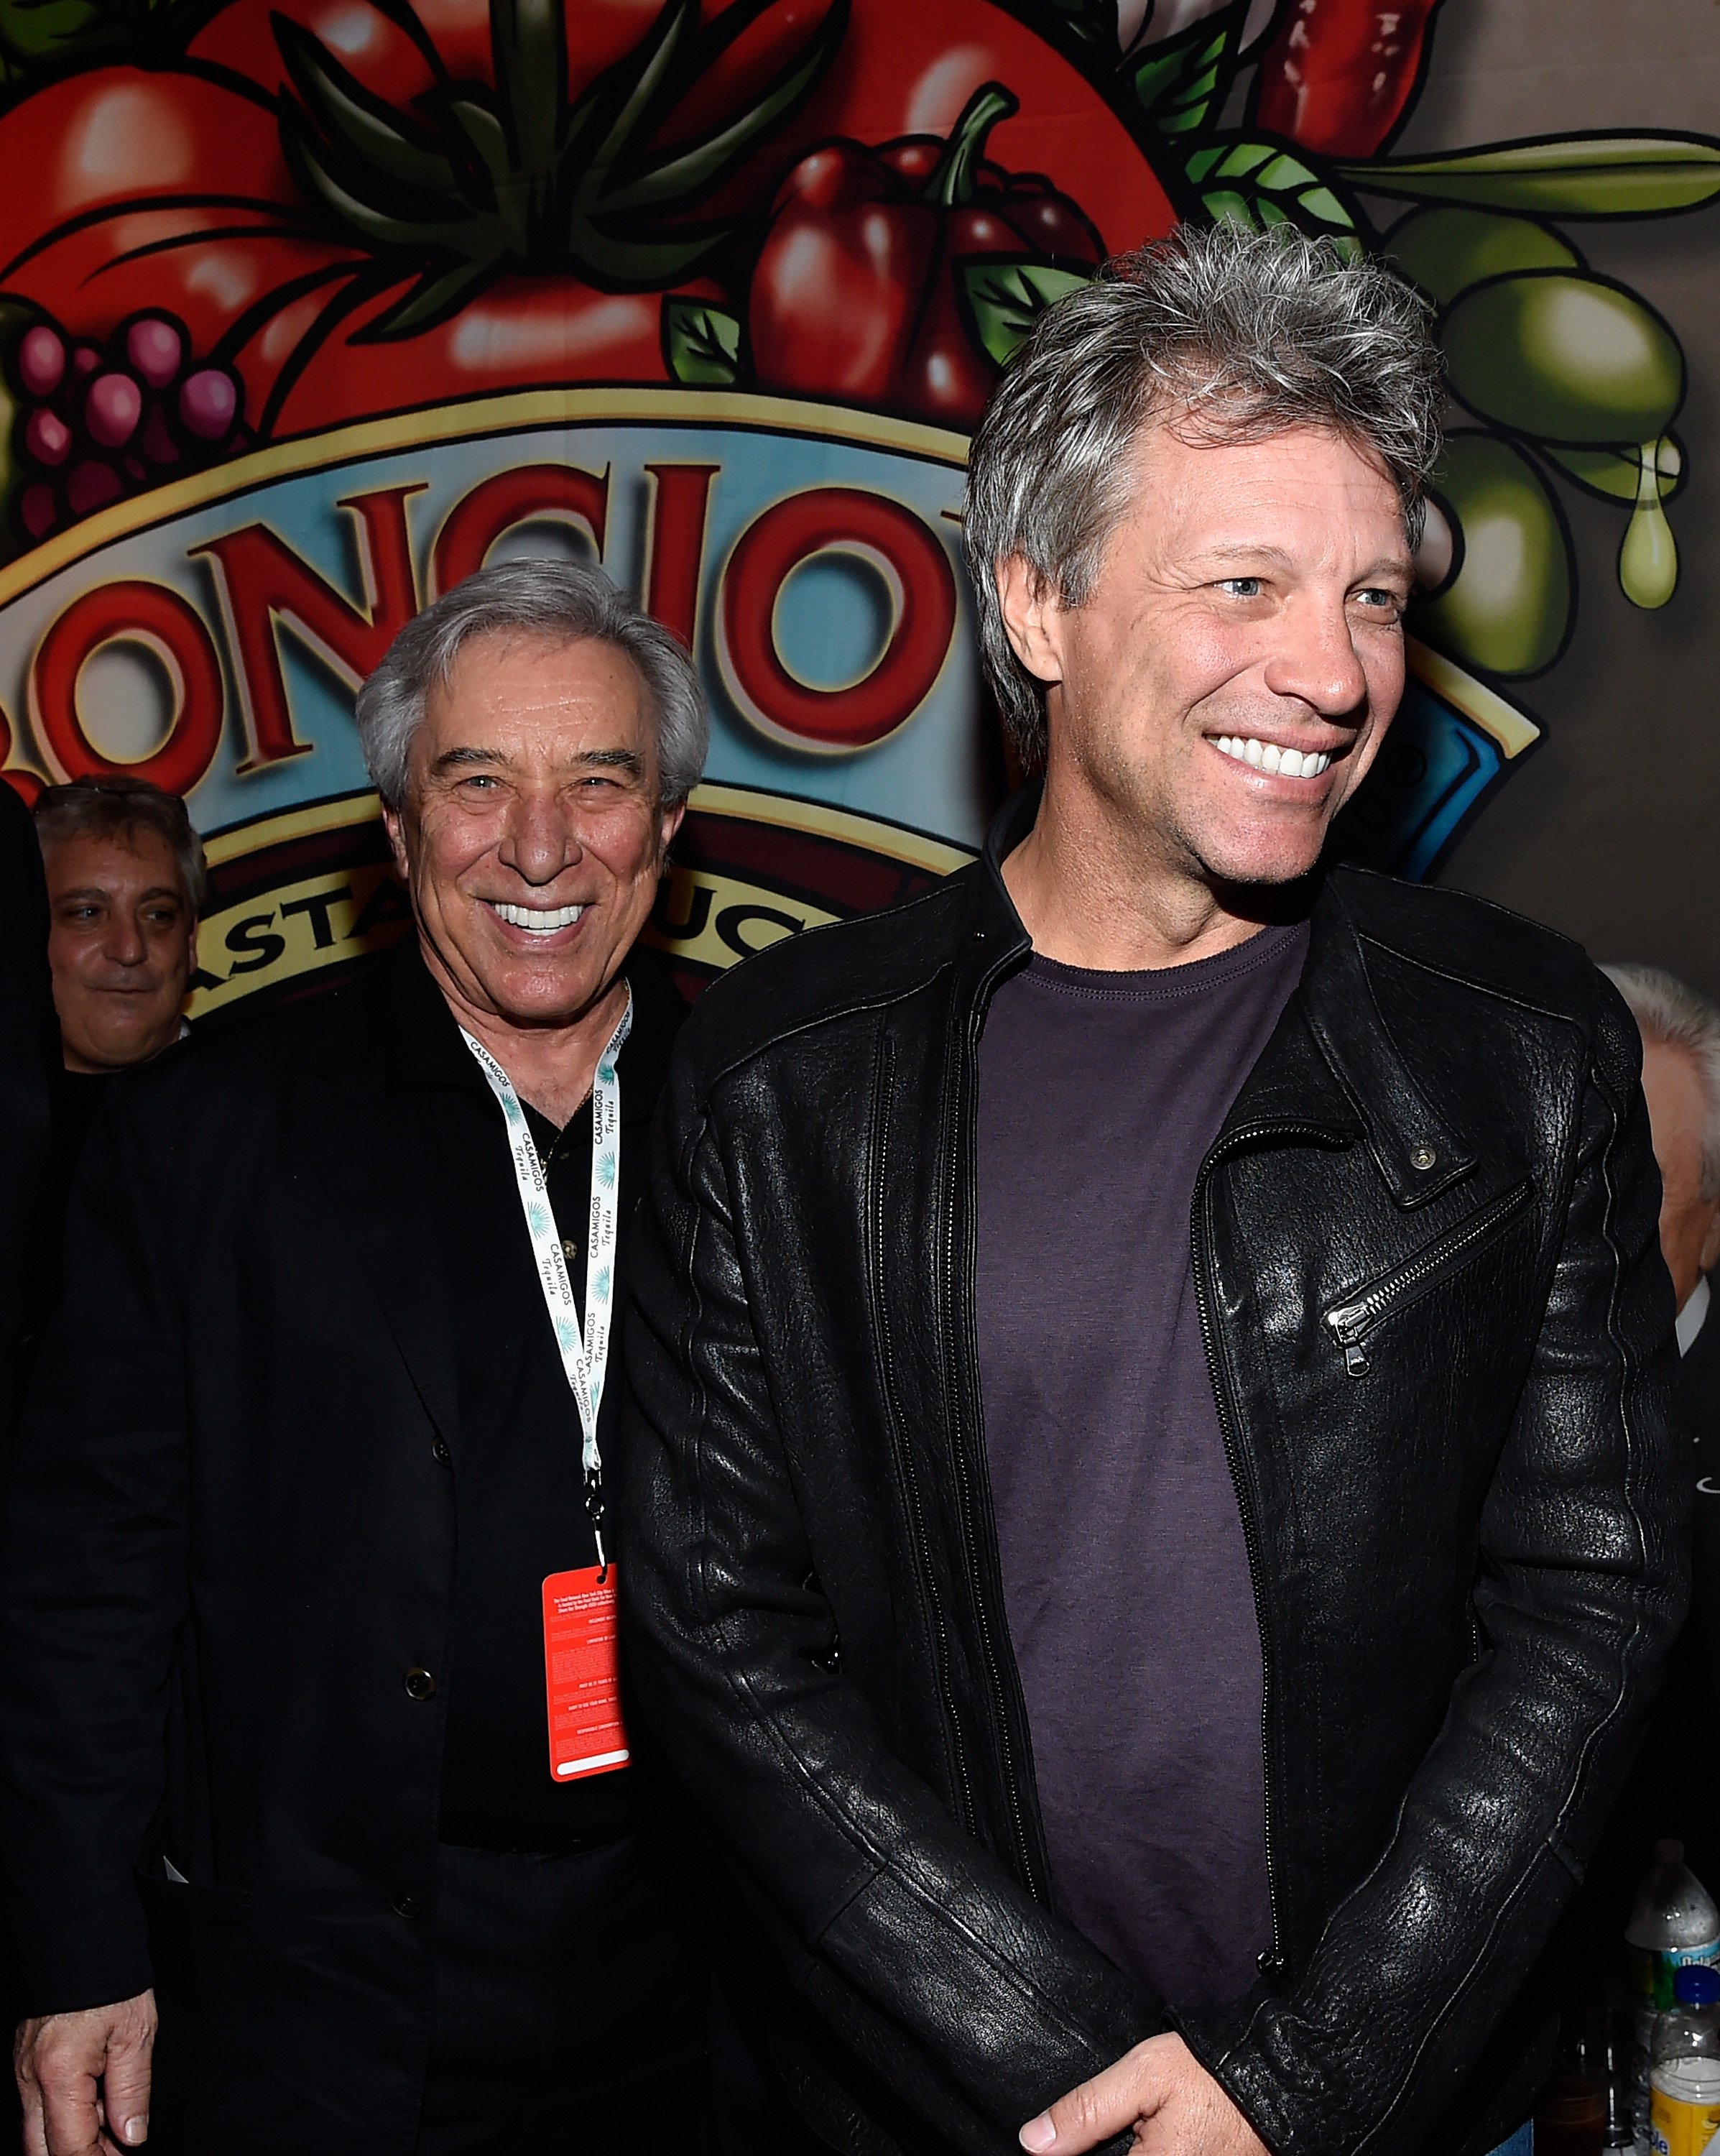 Jon Bon Jovi and\\u00a0John Francis Bongiovi Sr. posing at the Bongiovi Brand chef station at Ronzoni's La Sagra Slices at Esurance Rooftop Pier 92 in New York City\\u00a0on October 16, 2014. | Source: Getty Images